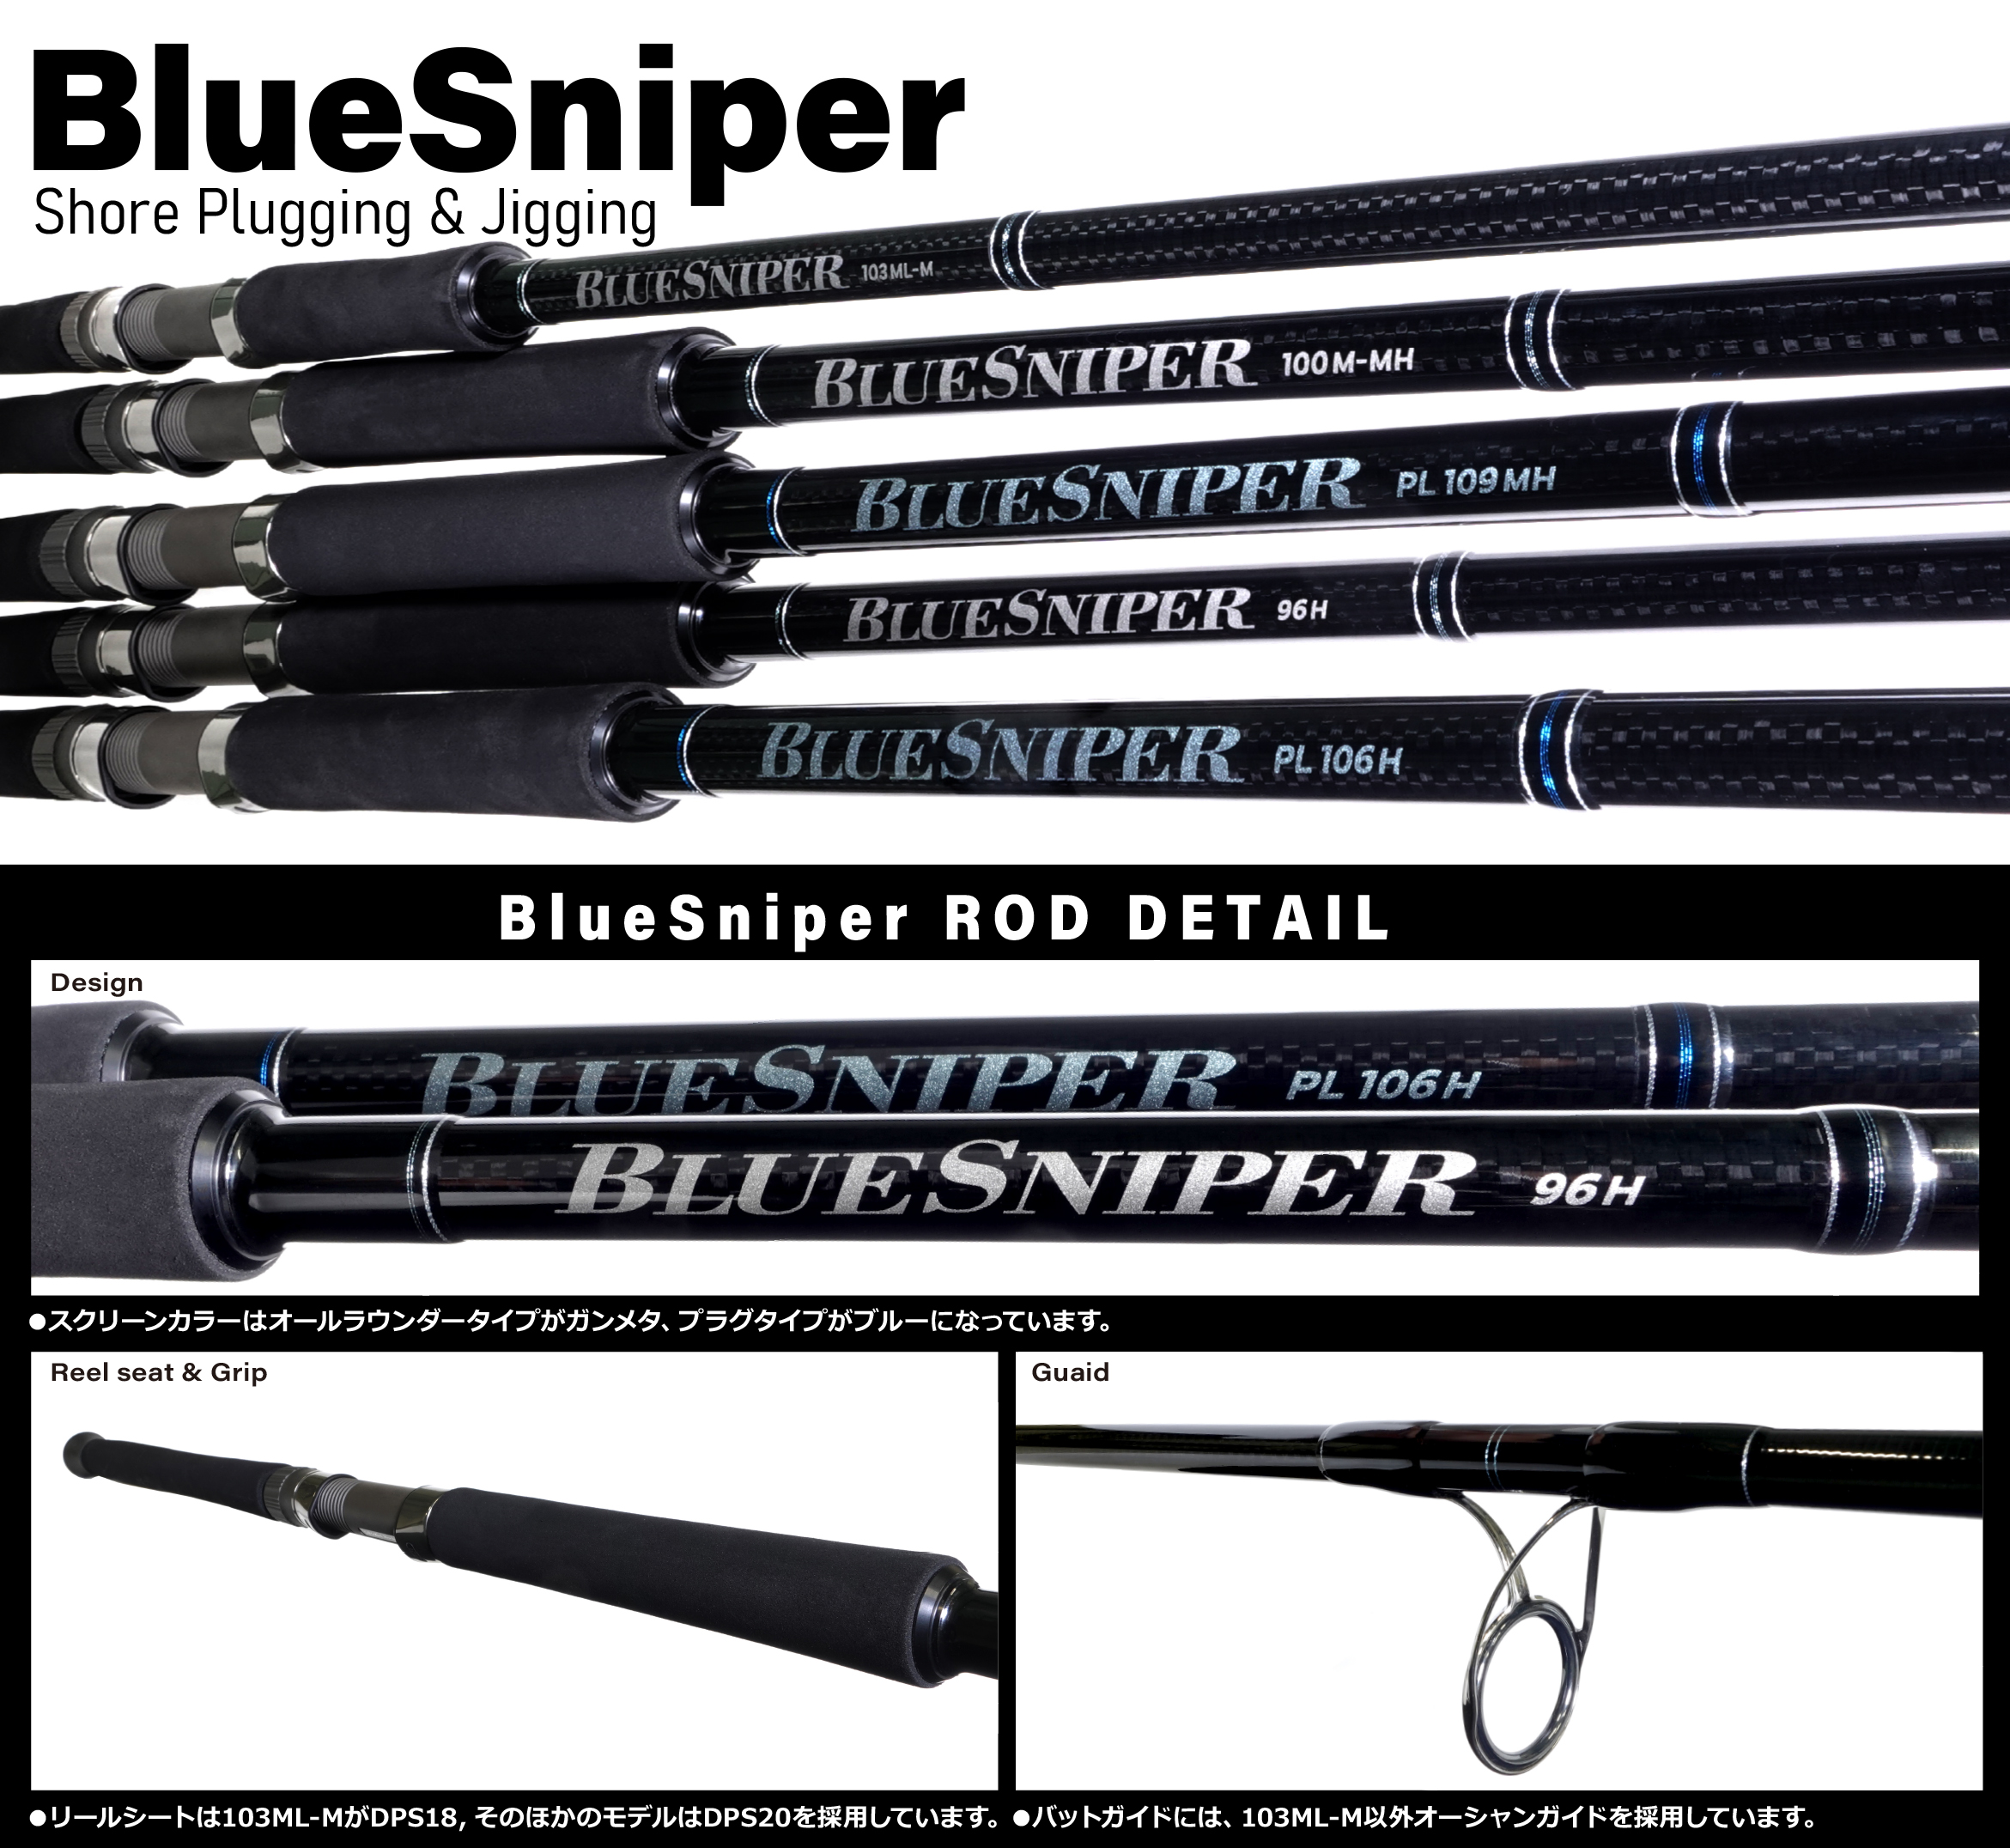 New BlueSniper | YAMAGA Blanks